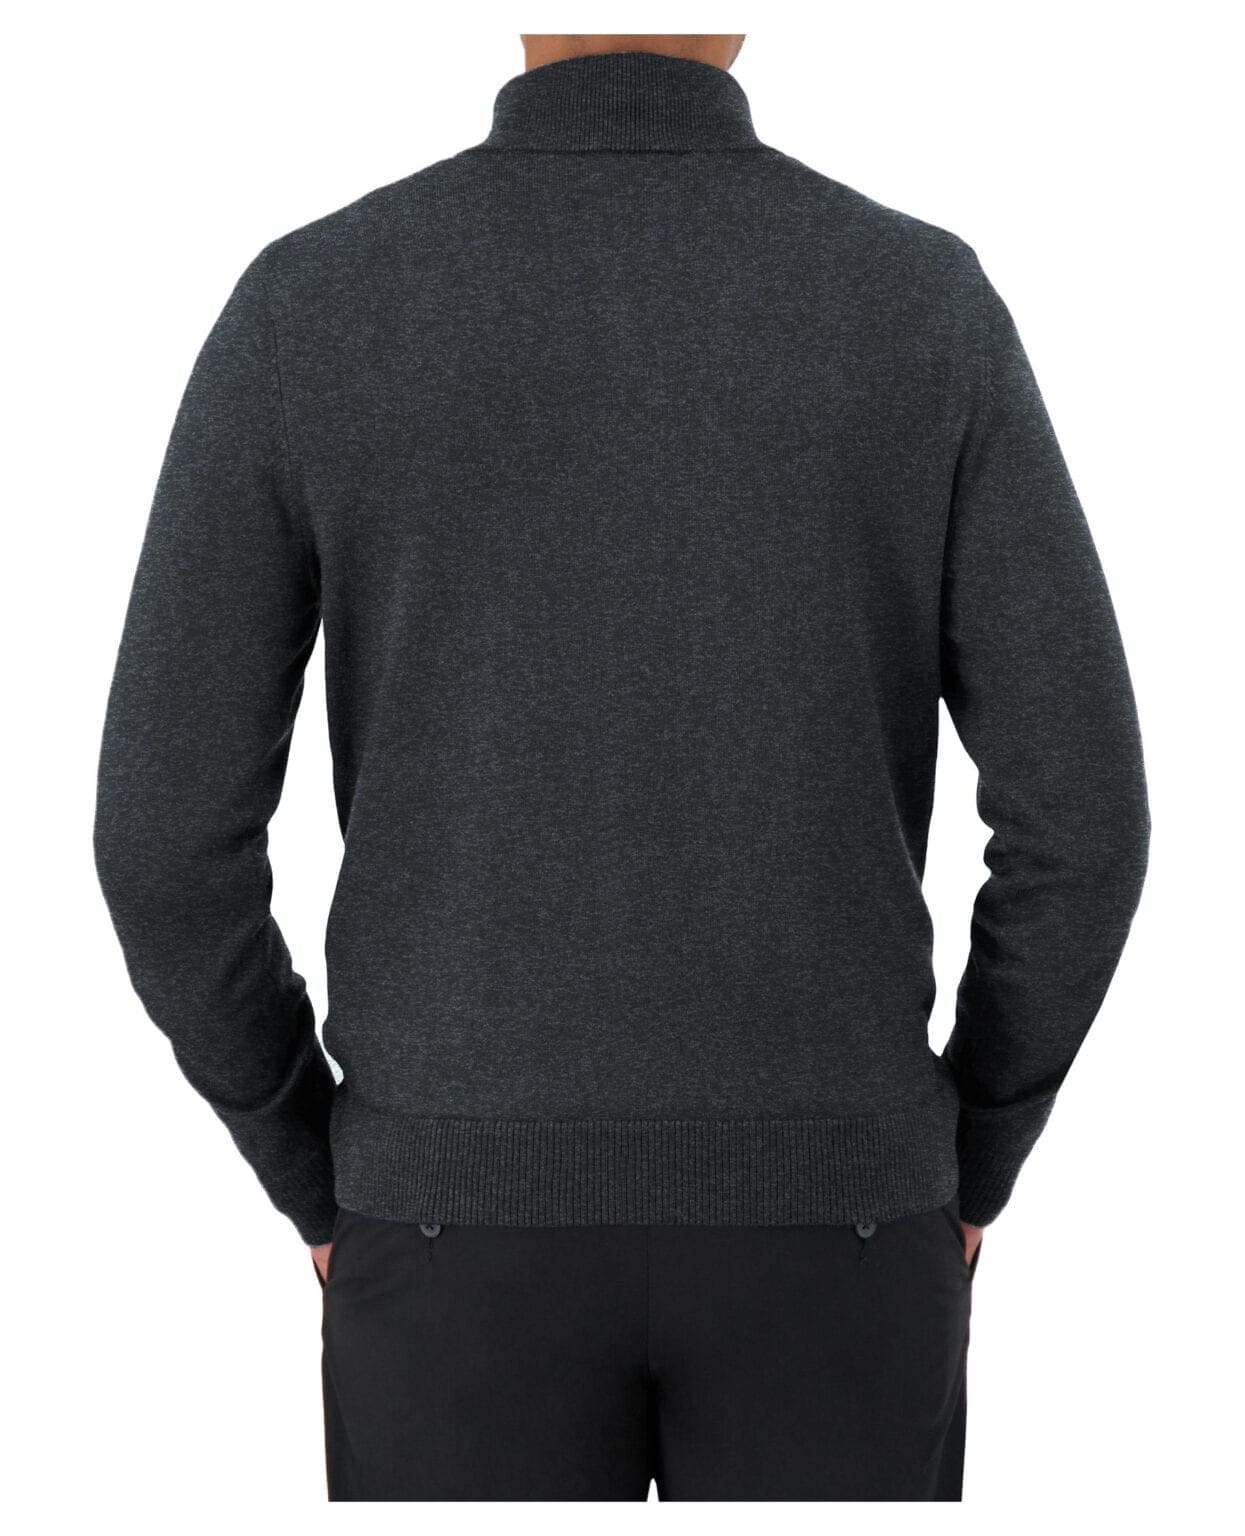 Long-Sleeve Mock-Neck T-Shirt with Back Zipper